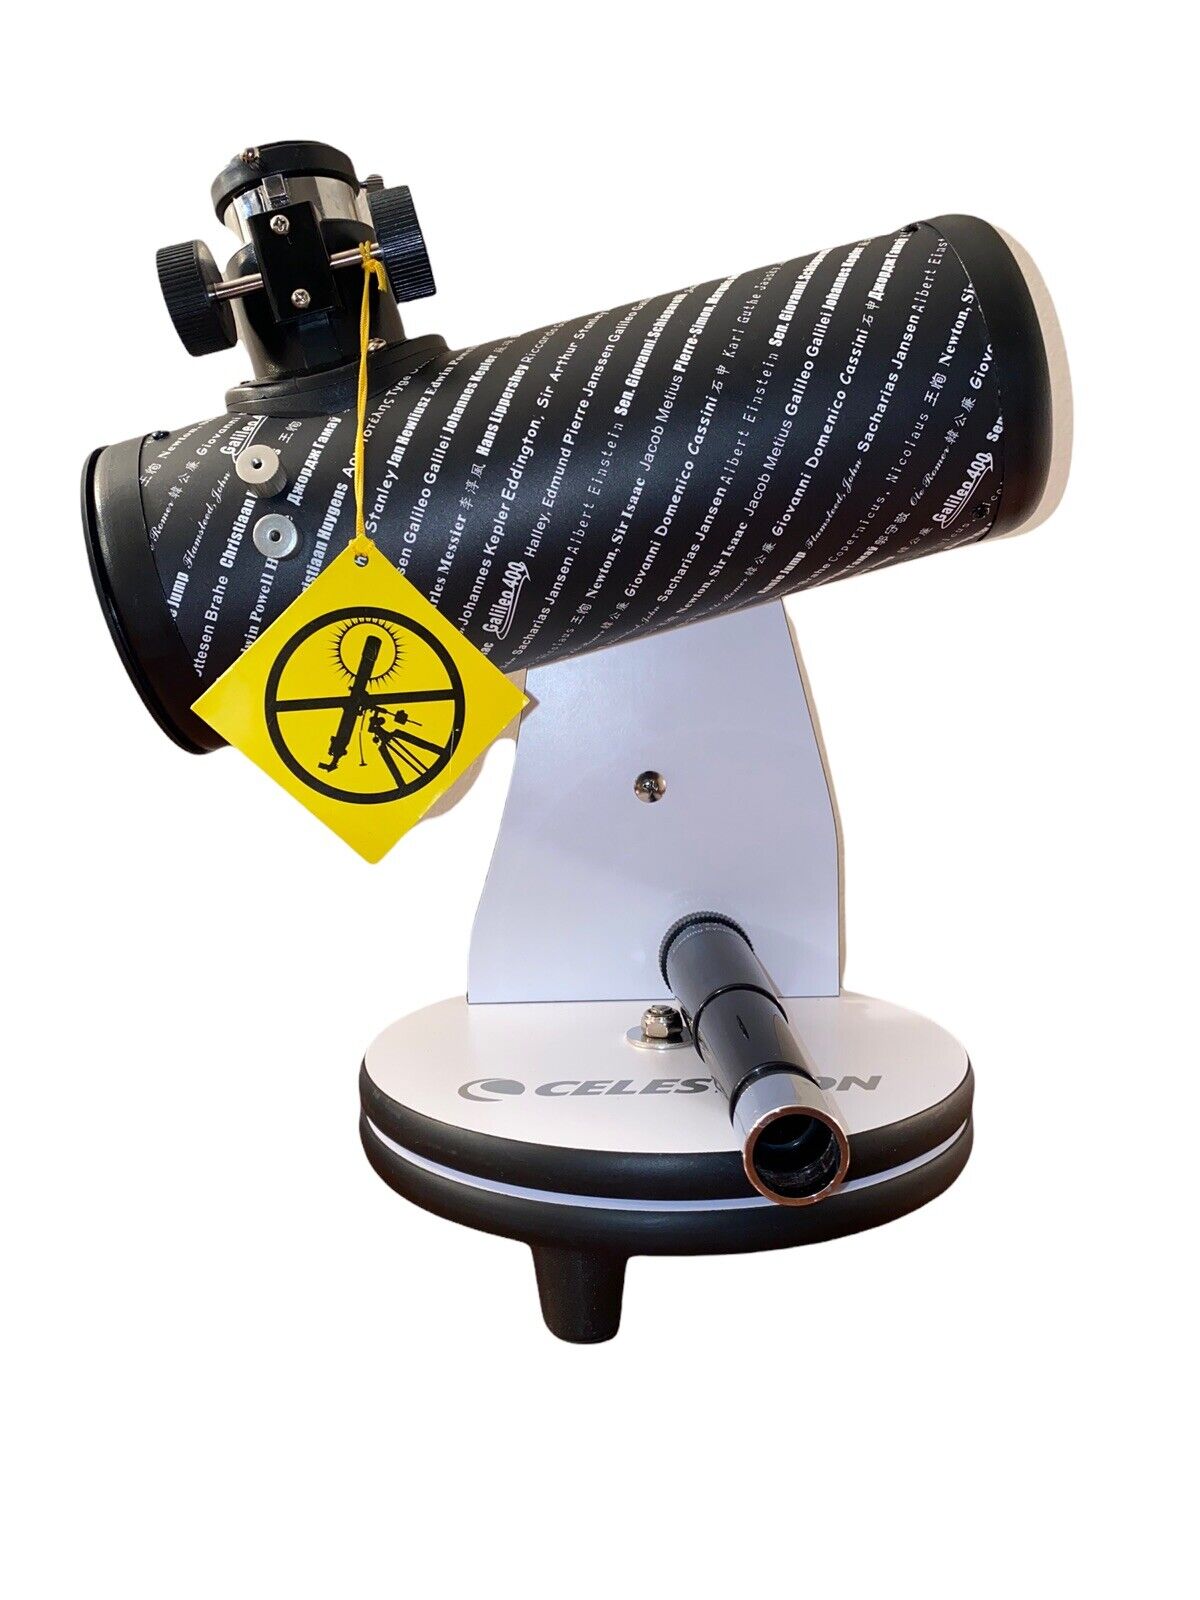 Celestron First Scope Telescope 76mm Table Top w/Erecting Eyepiece Model #21024